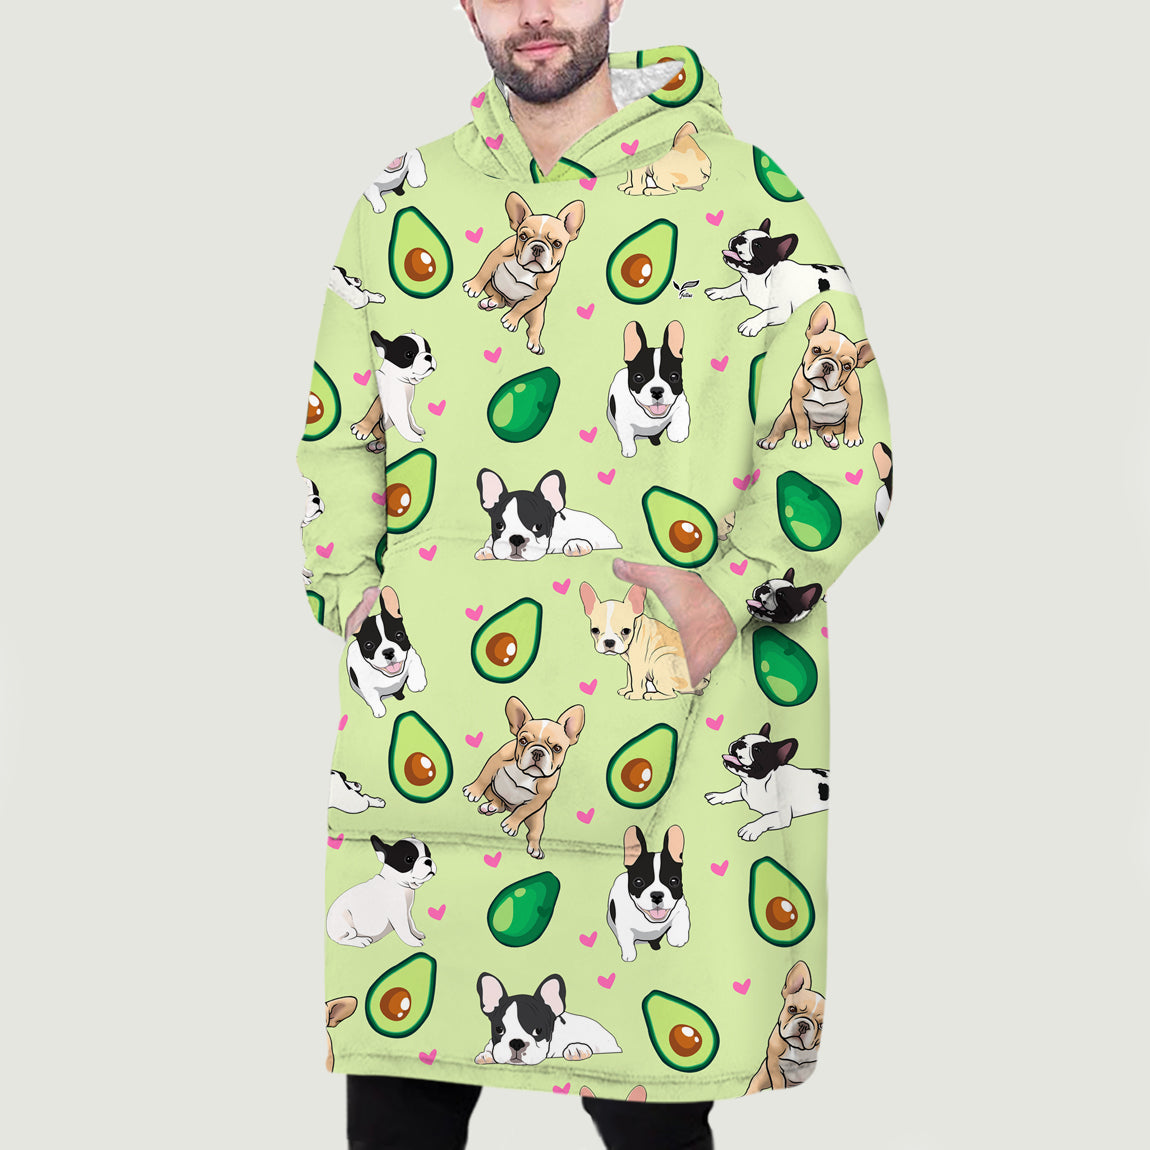 I Love Avocados - French Bulldog Fleece Blanket Hoodie